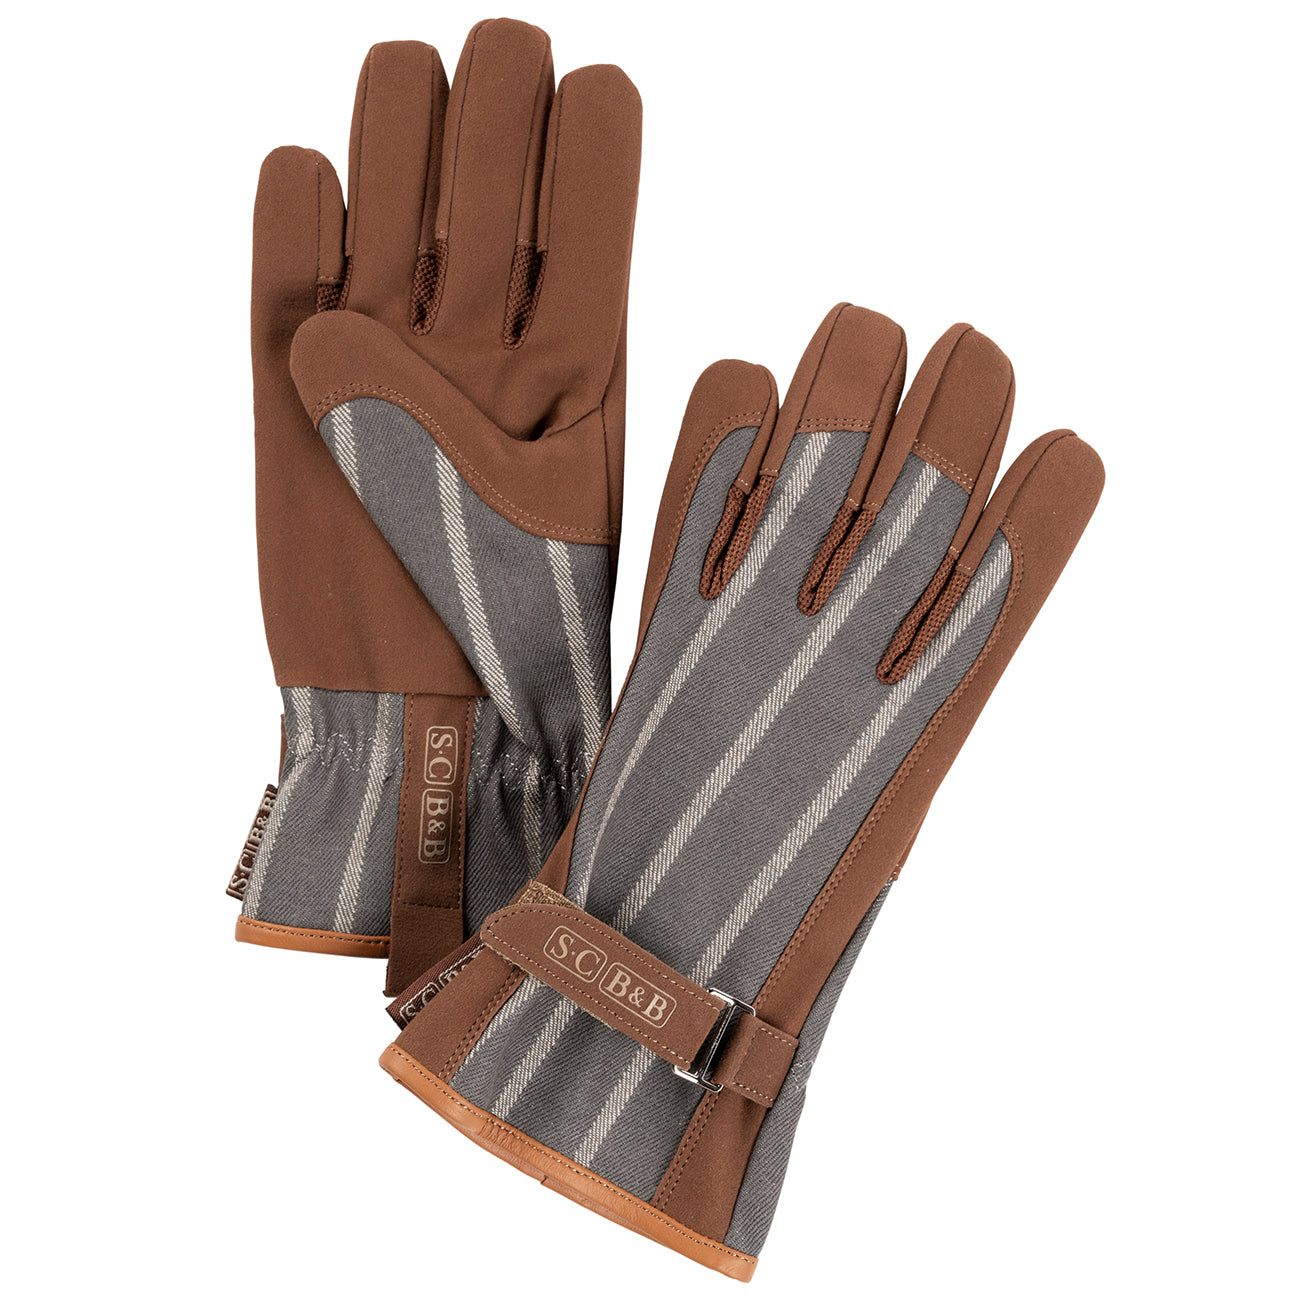 Sophie Conran for Burgon & Ball Everyday Gardening Gloves in grey ticking stripe.